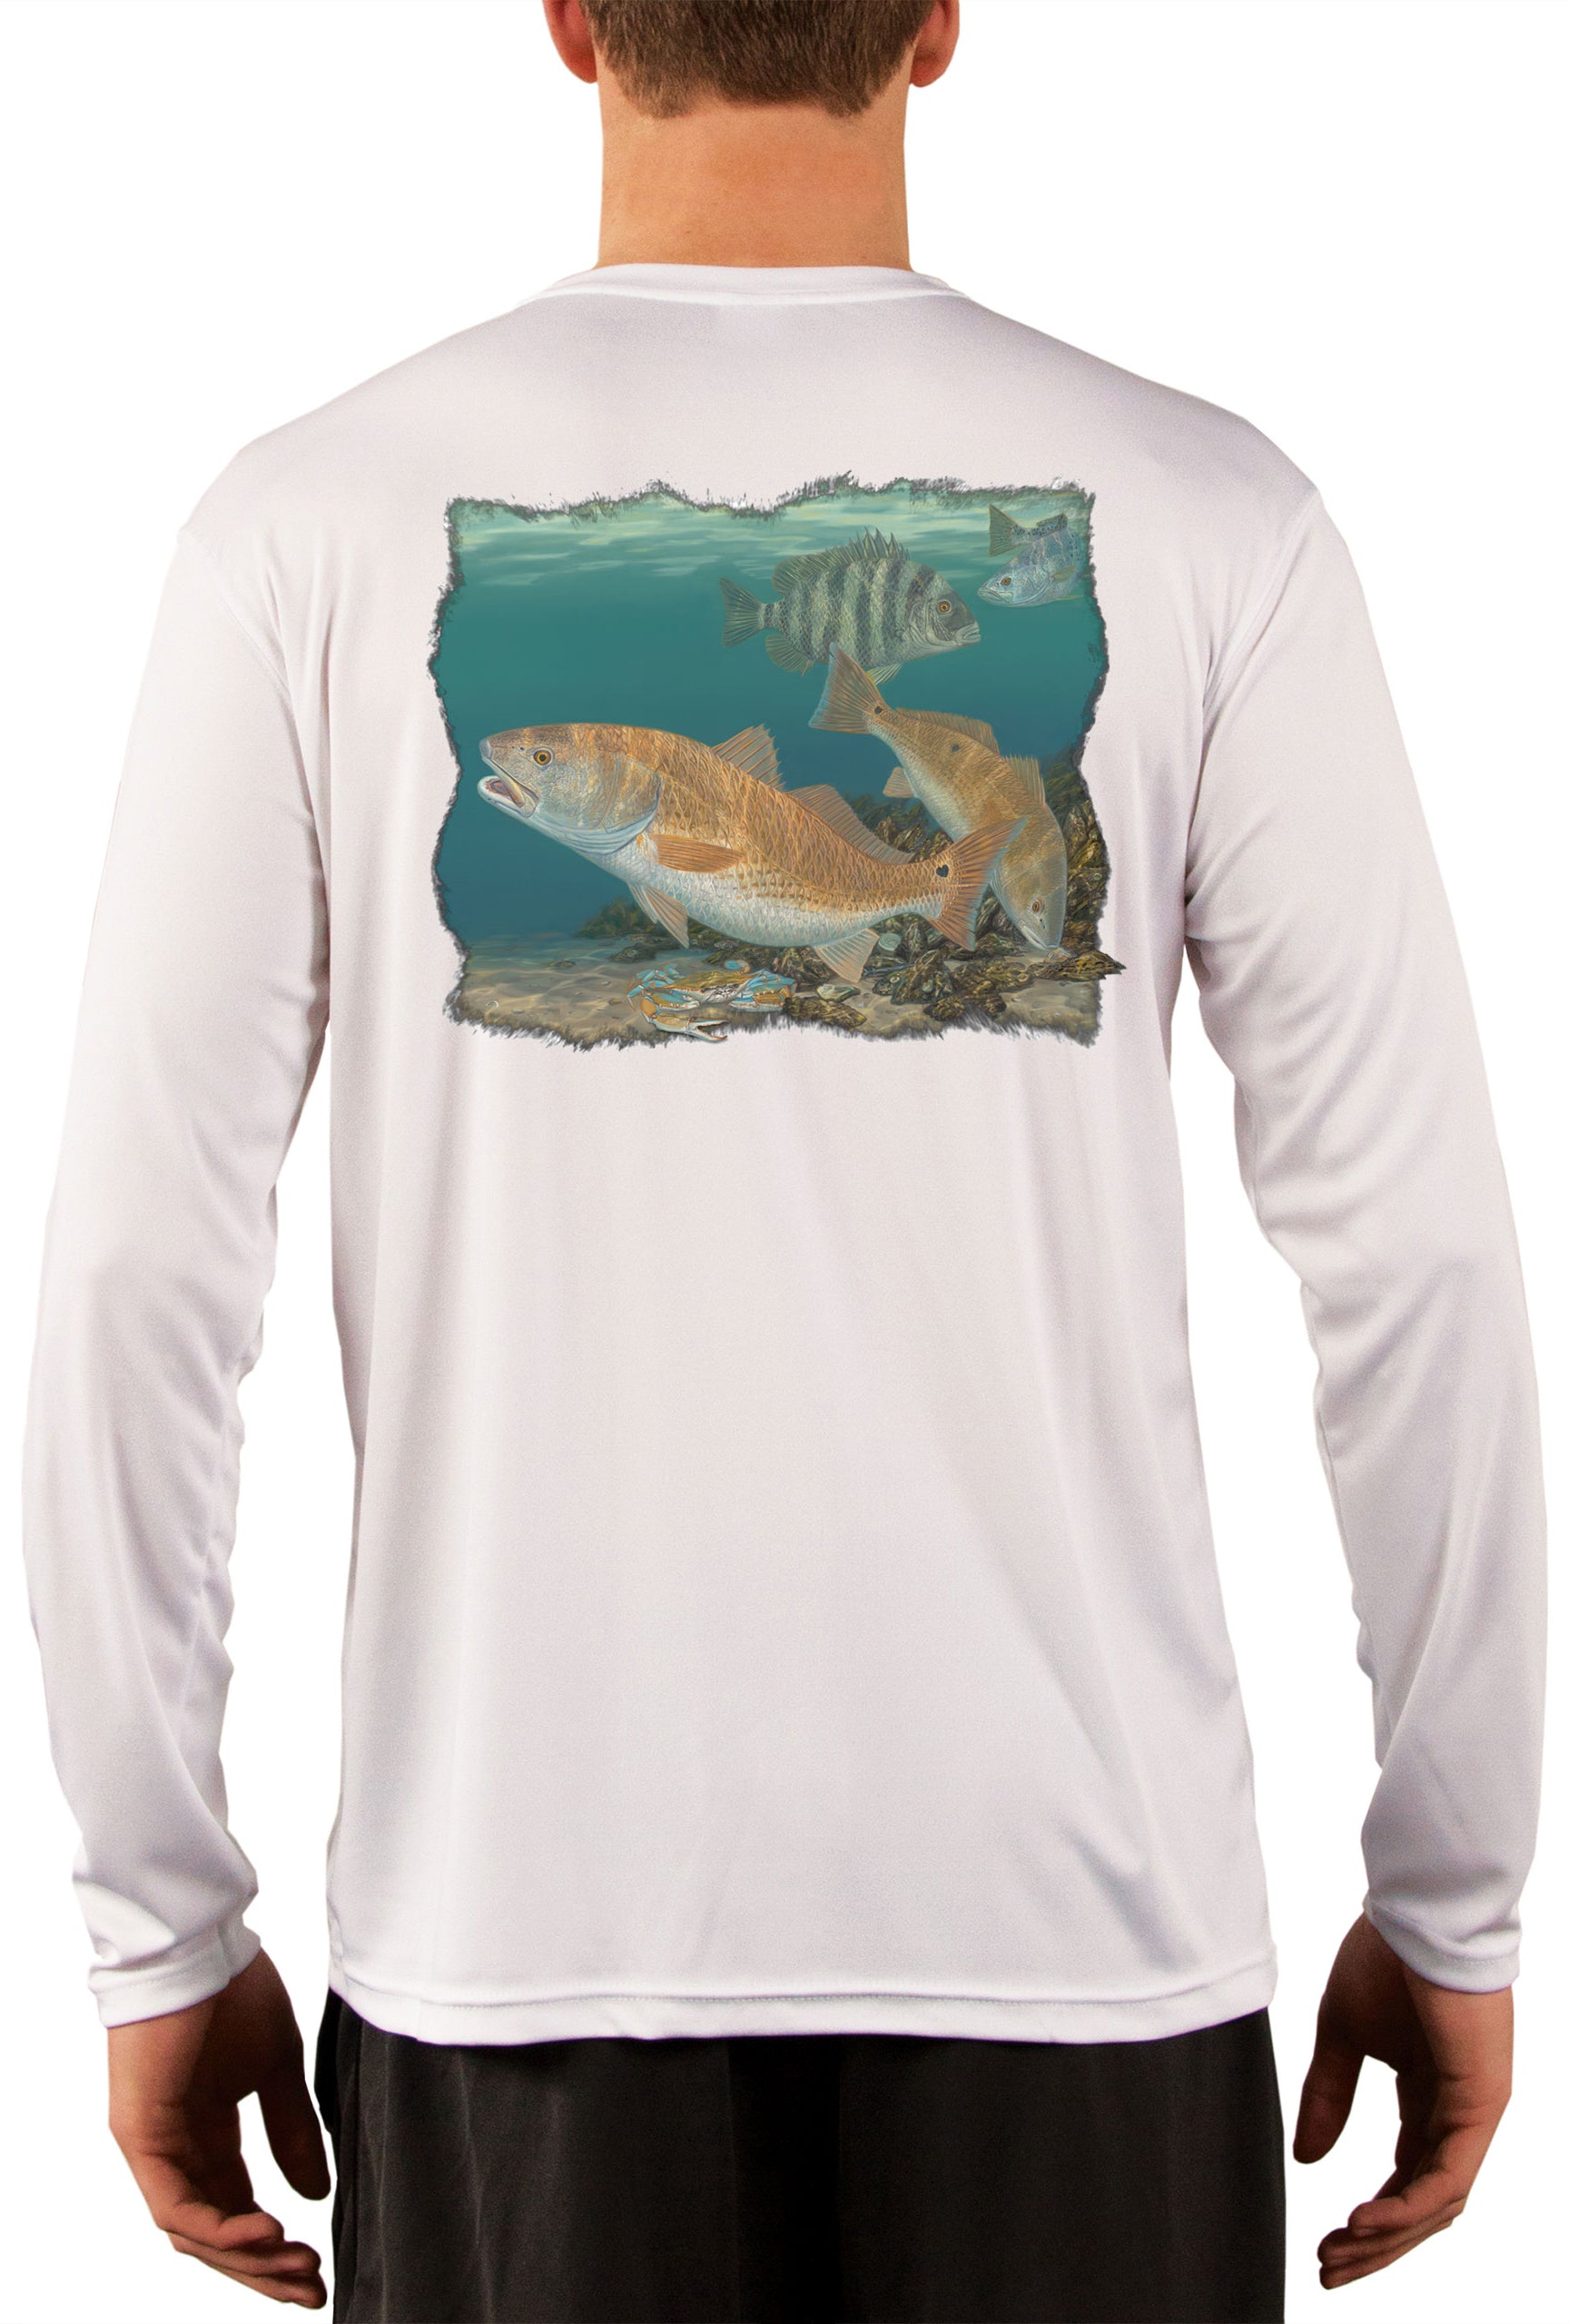 Redfish Sheepshead Design by Randy McGovern Fishing Shirts for Men White / X-Large